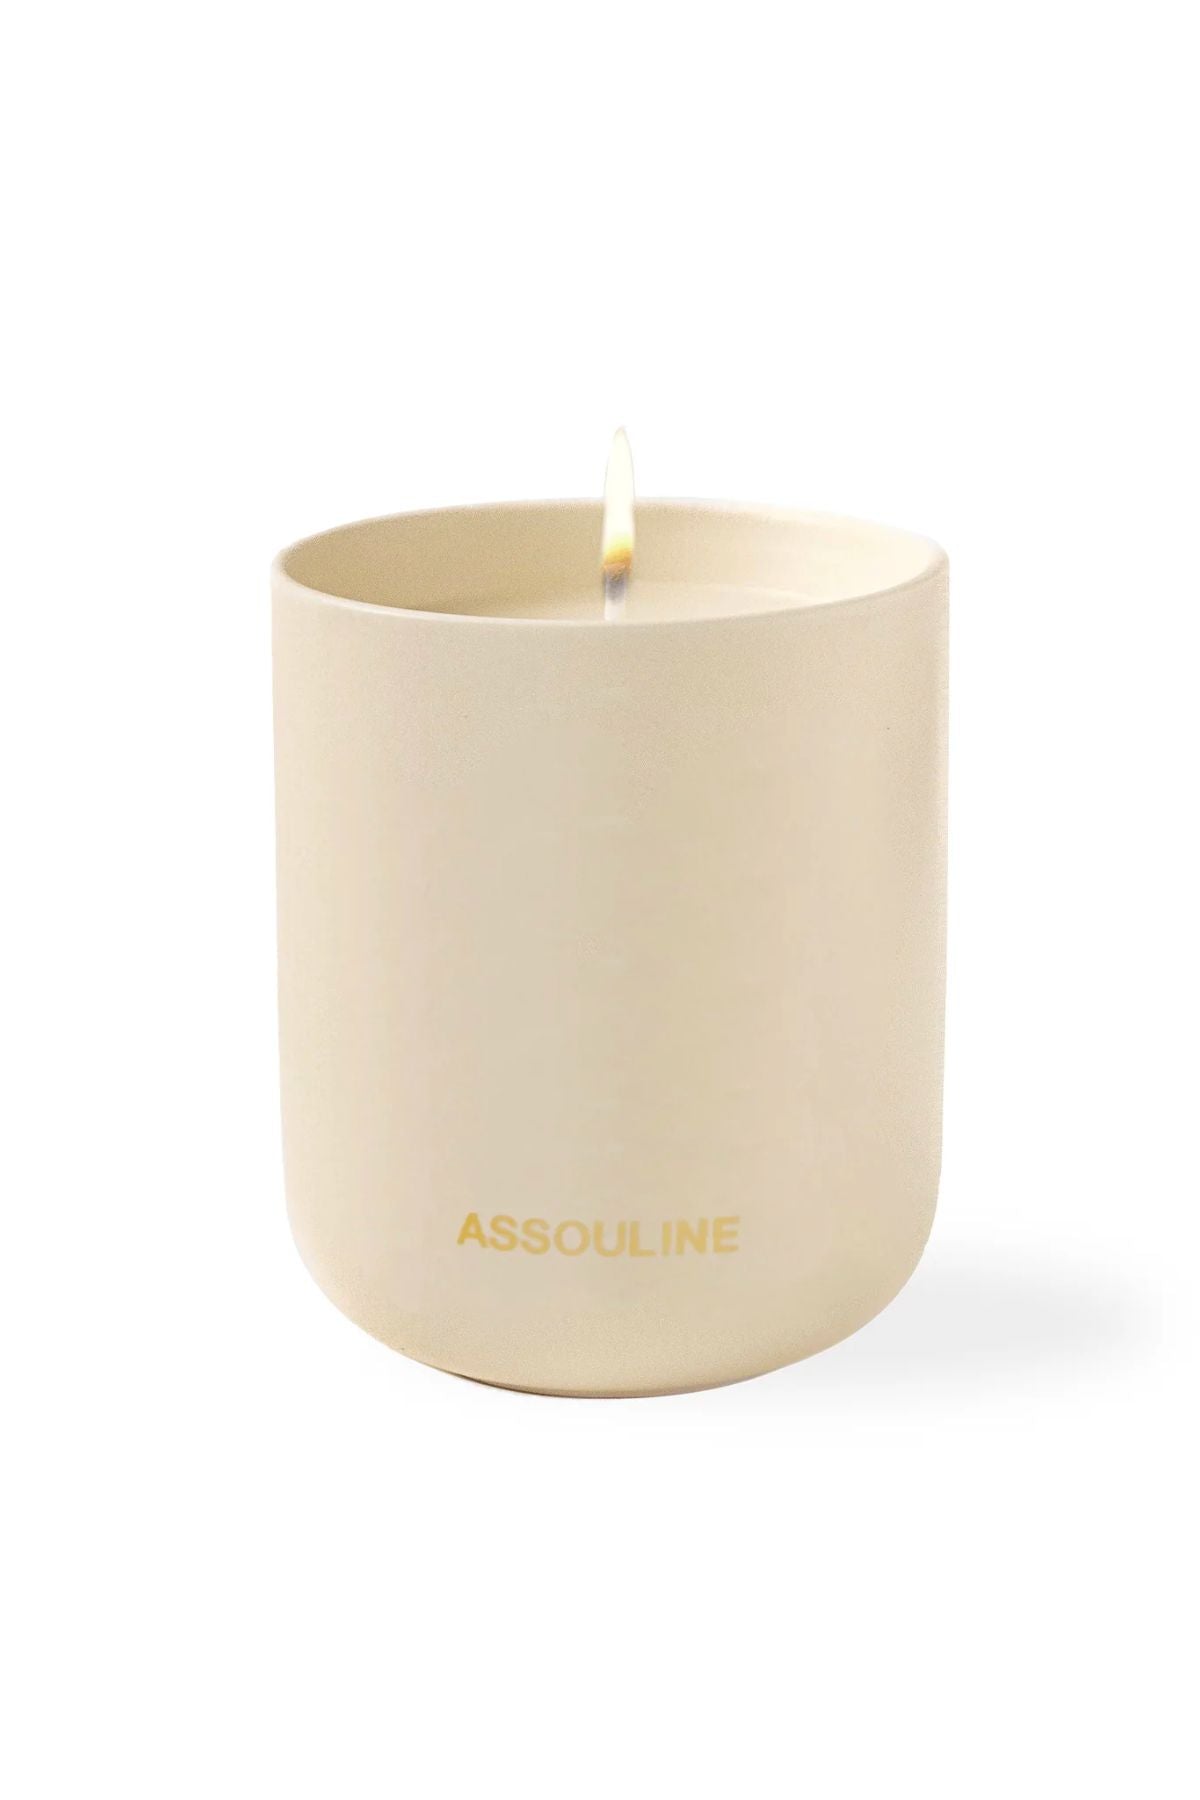 Assouline Tulum Gypset Candle